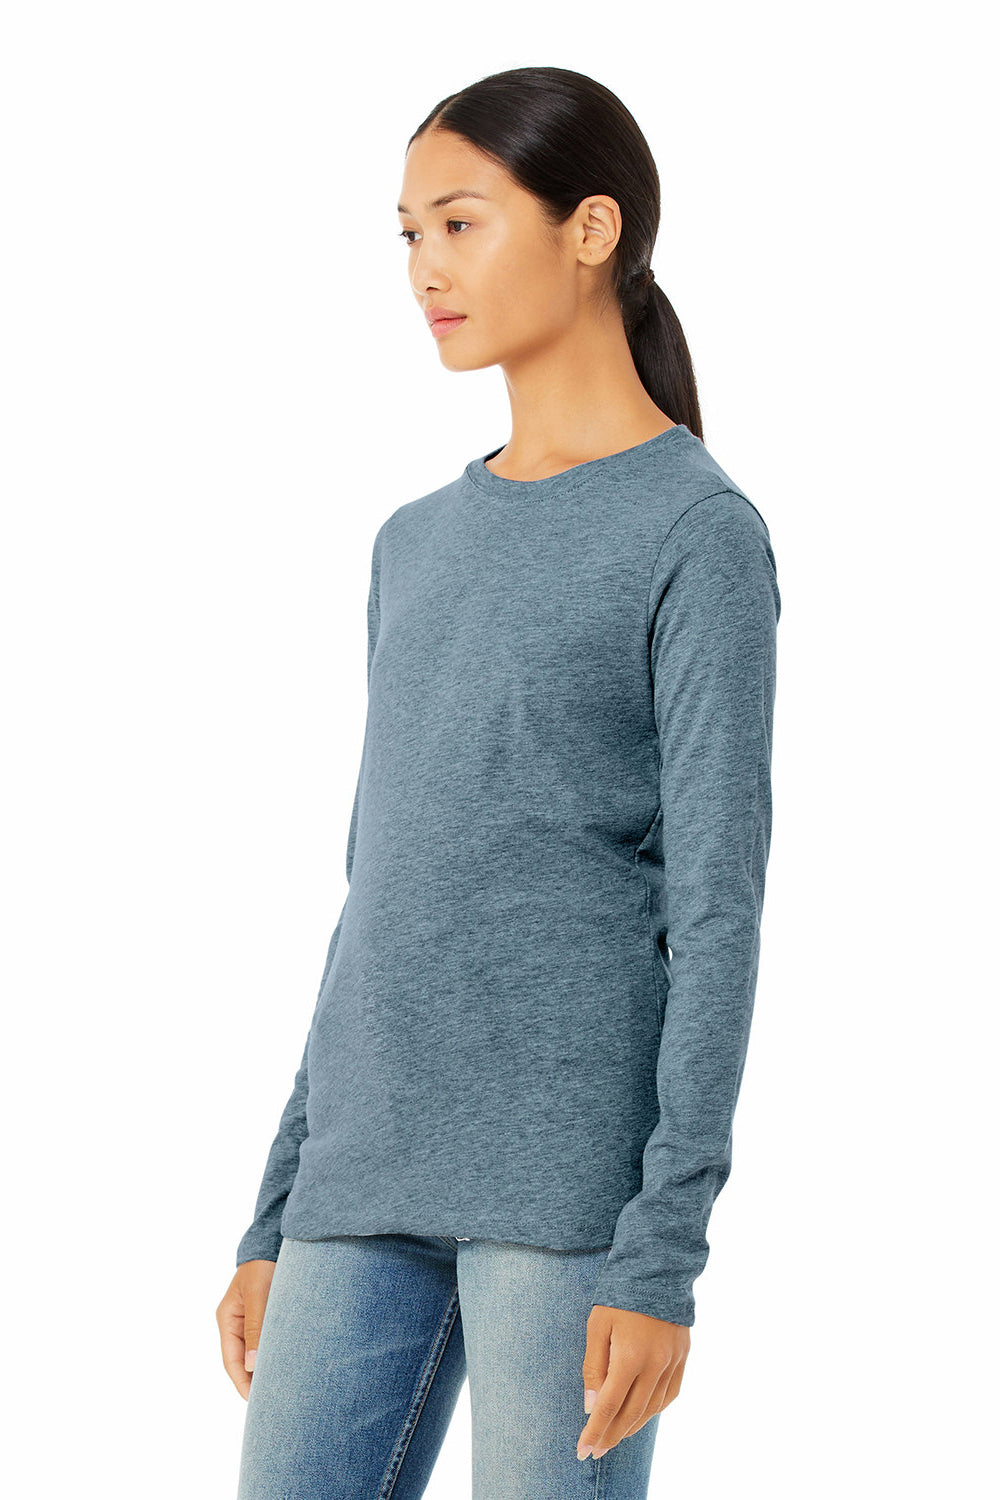 Bella + Canvas B6500/6500 Womens Jersey Long Sleeve Crewneck T-Shirt Heather Deep Teal Model 3Q